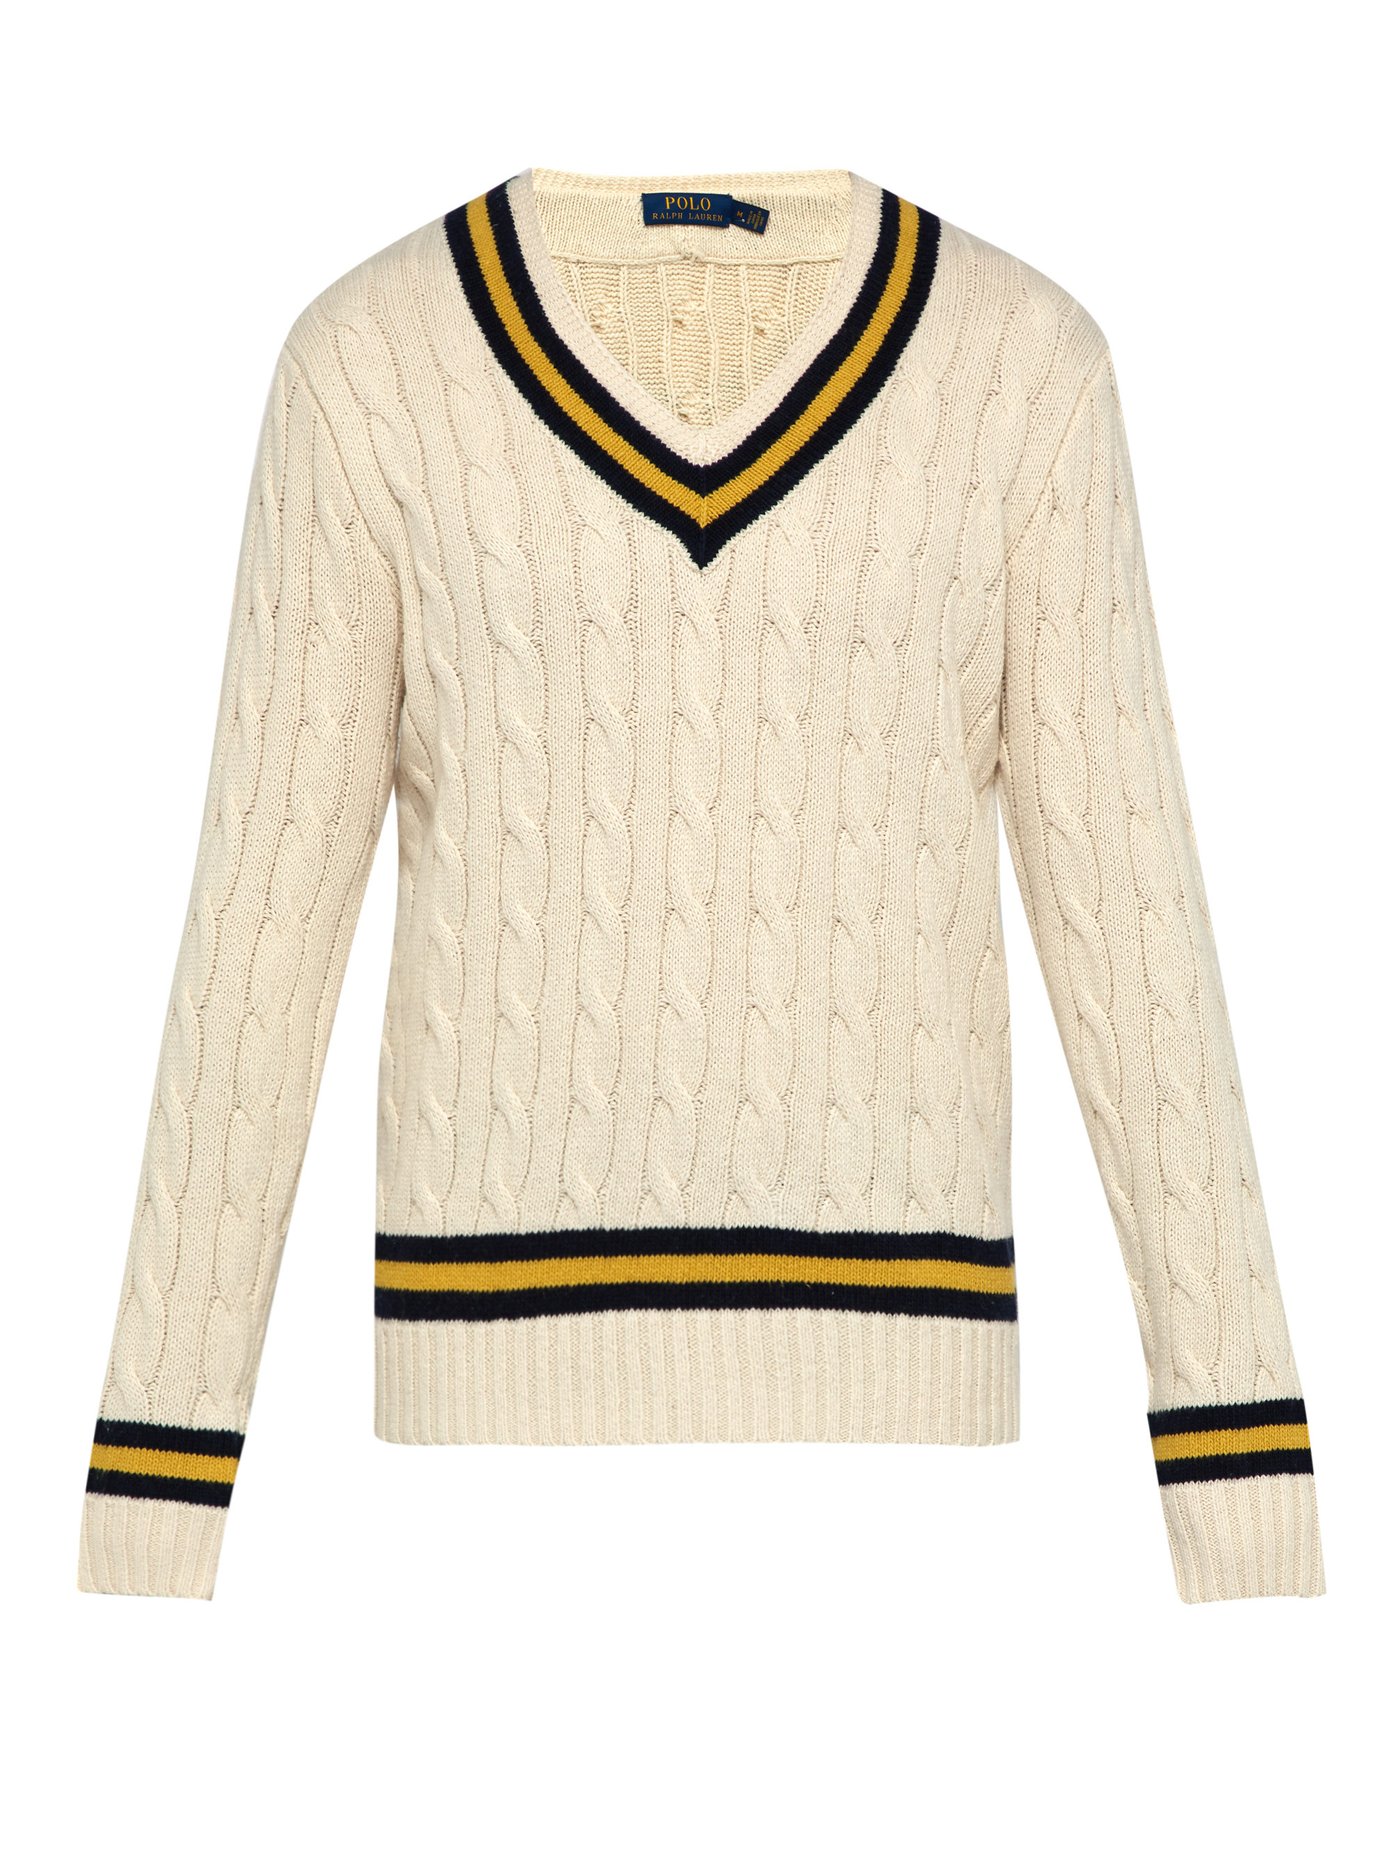 ralph lauren iconic cricket sweater